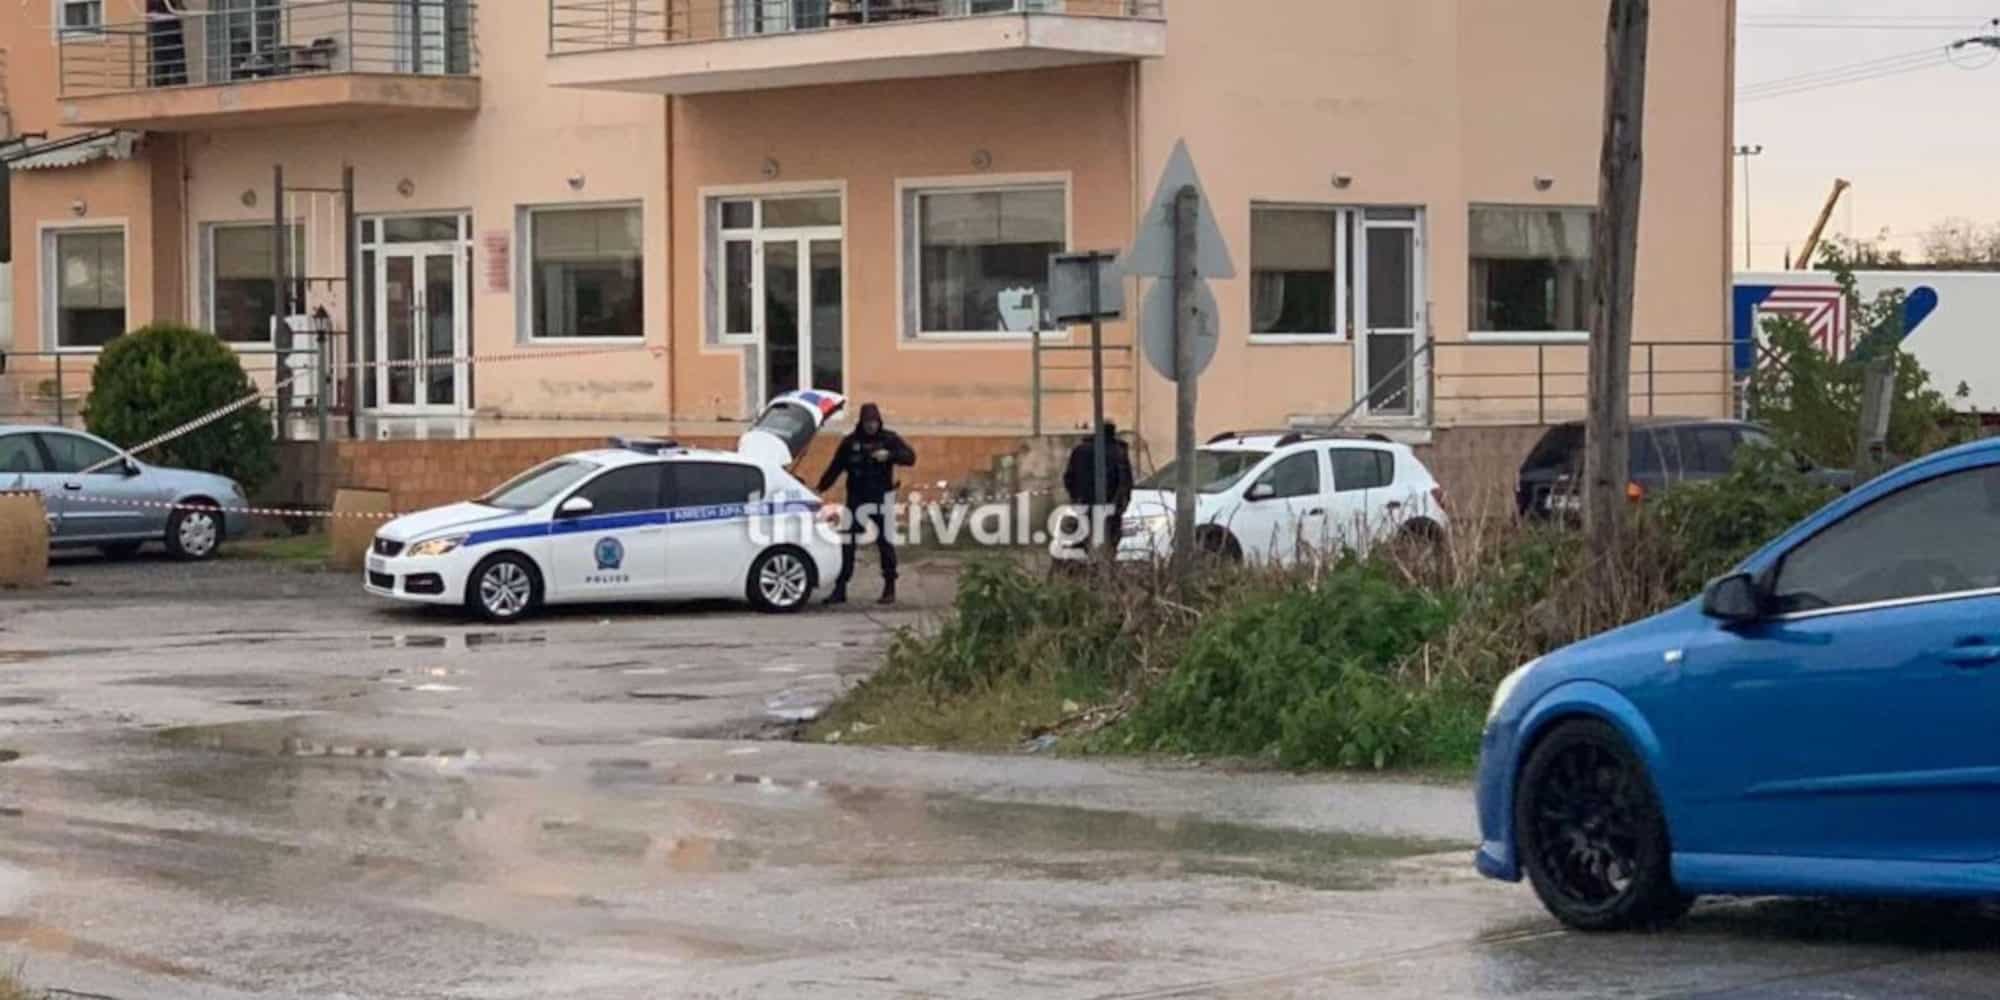 thessaloniki peripoliko 5 12 - Καταδίωξη στη Θεσσαλονίκη: Ανήλικος ο οδηγός που προσπάθησε να εμβολίσει περιπολικό και καρφώθηκε σε τοίχο – Νοσηλεύεται σε σοβαρή κατάσταση